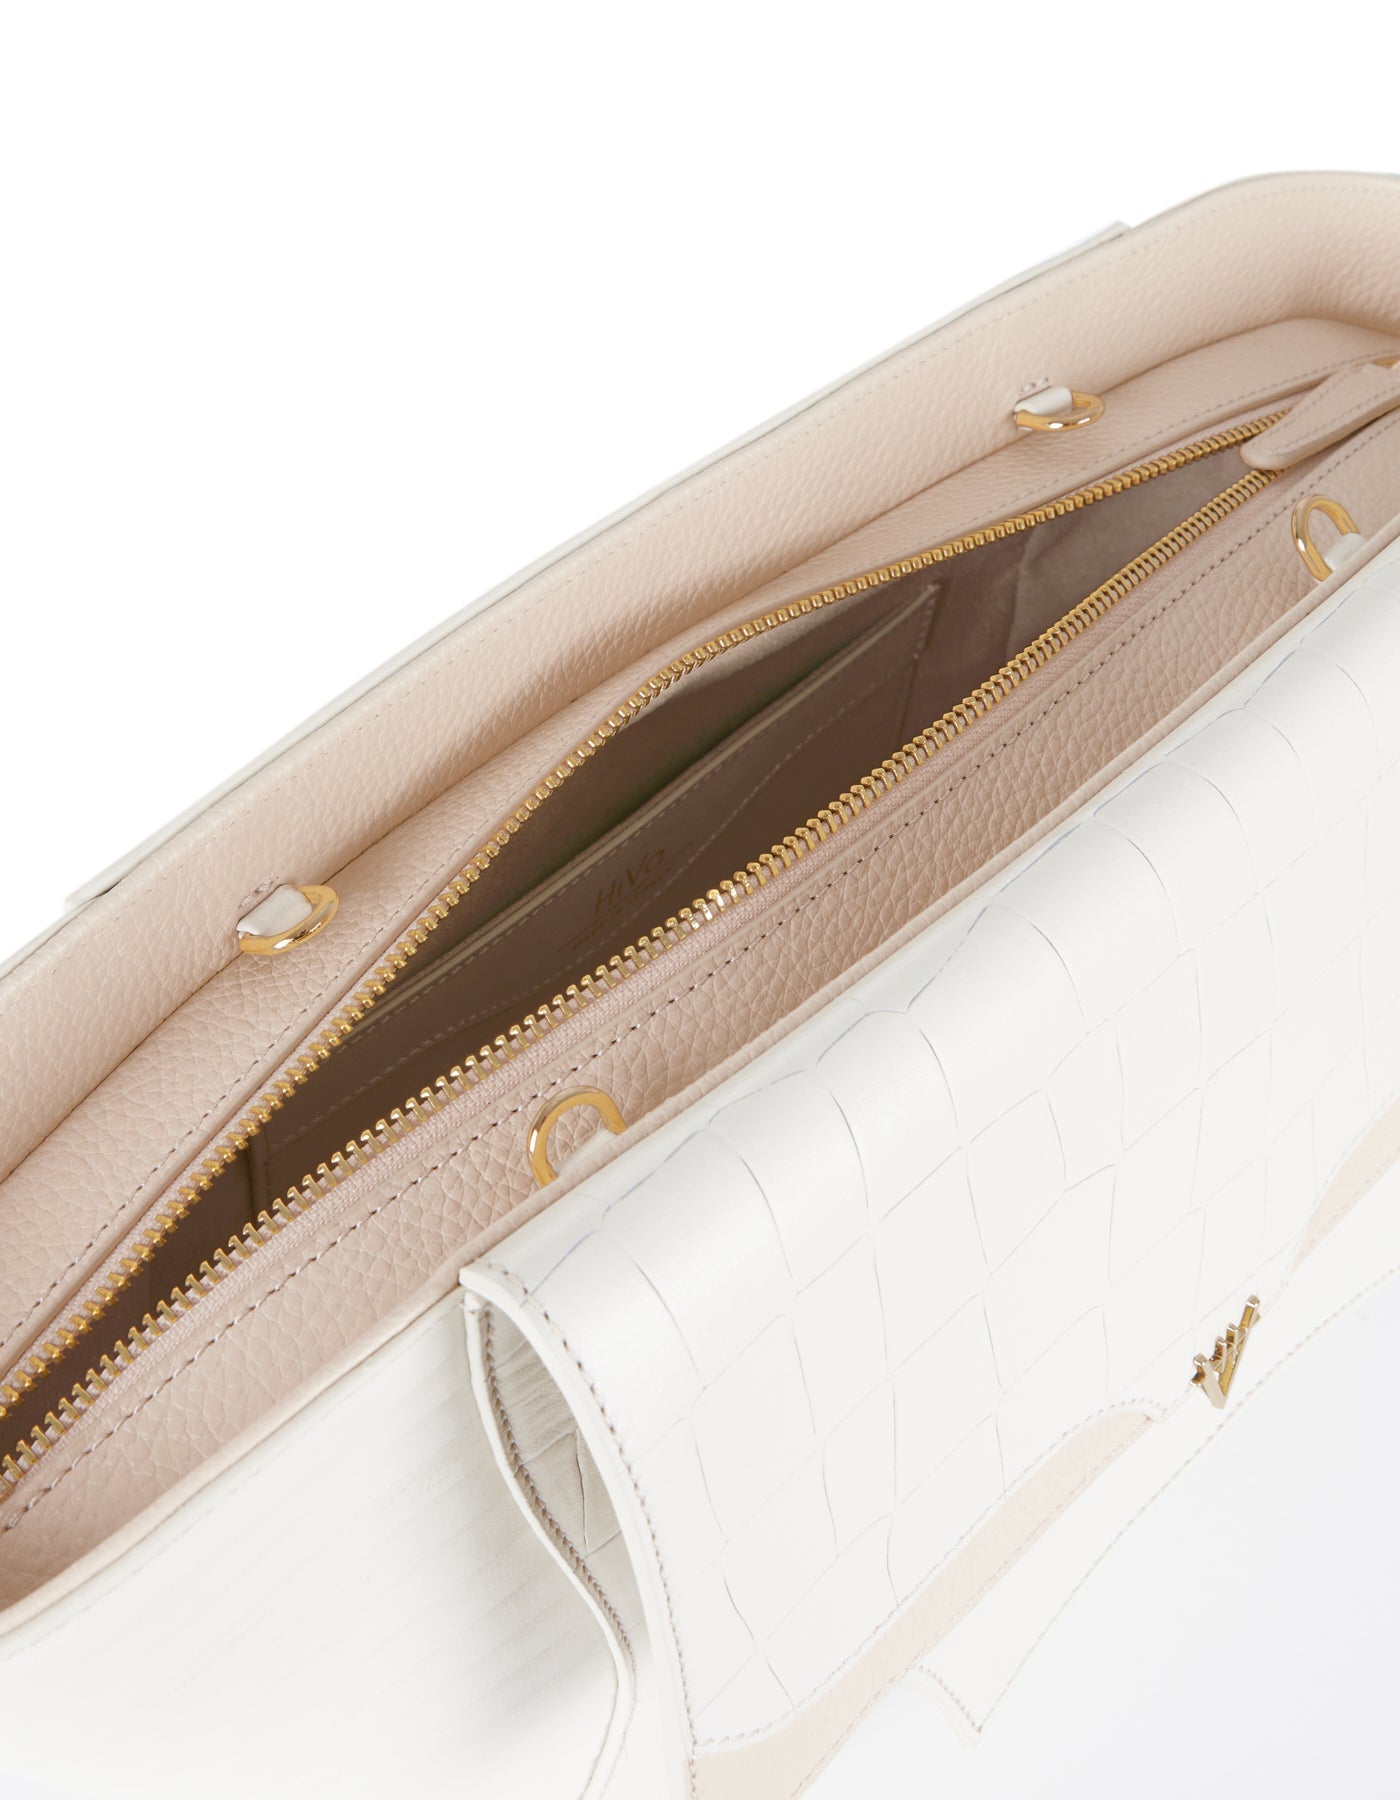 Hiva Atelier | Orbis Tote Bag Cotton Soft Pink | Beautiful and Versatile